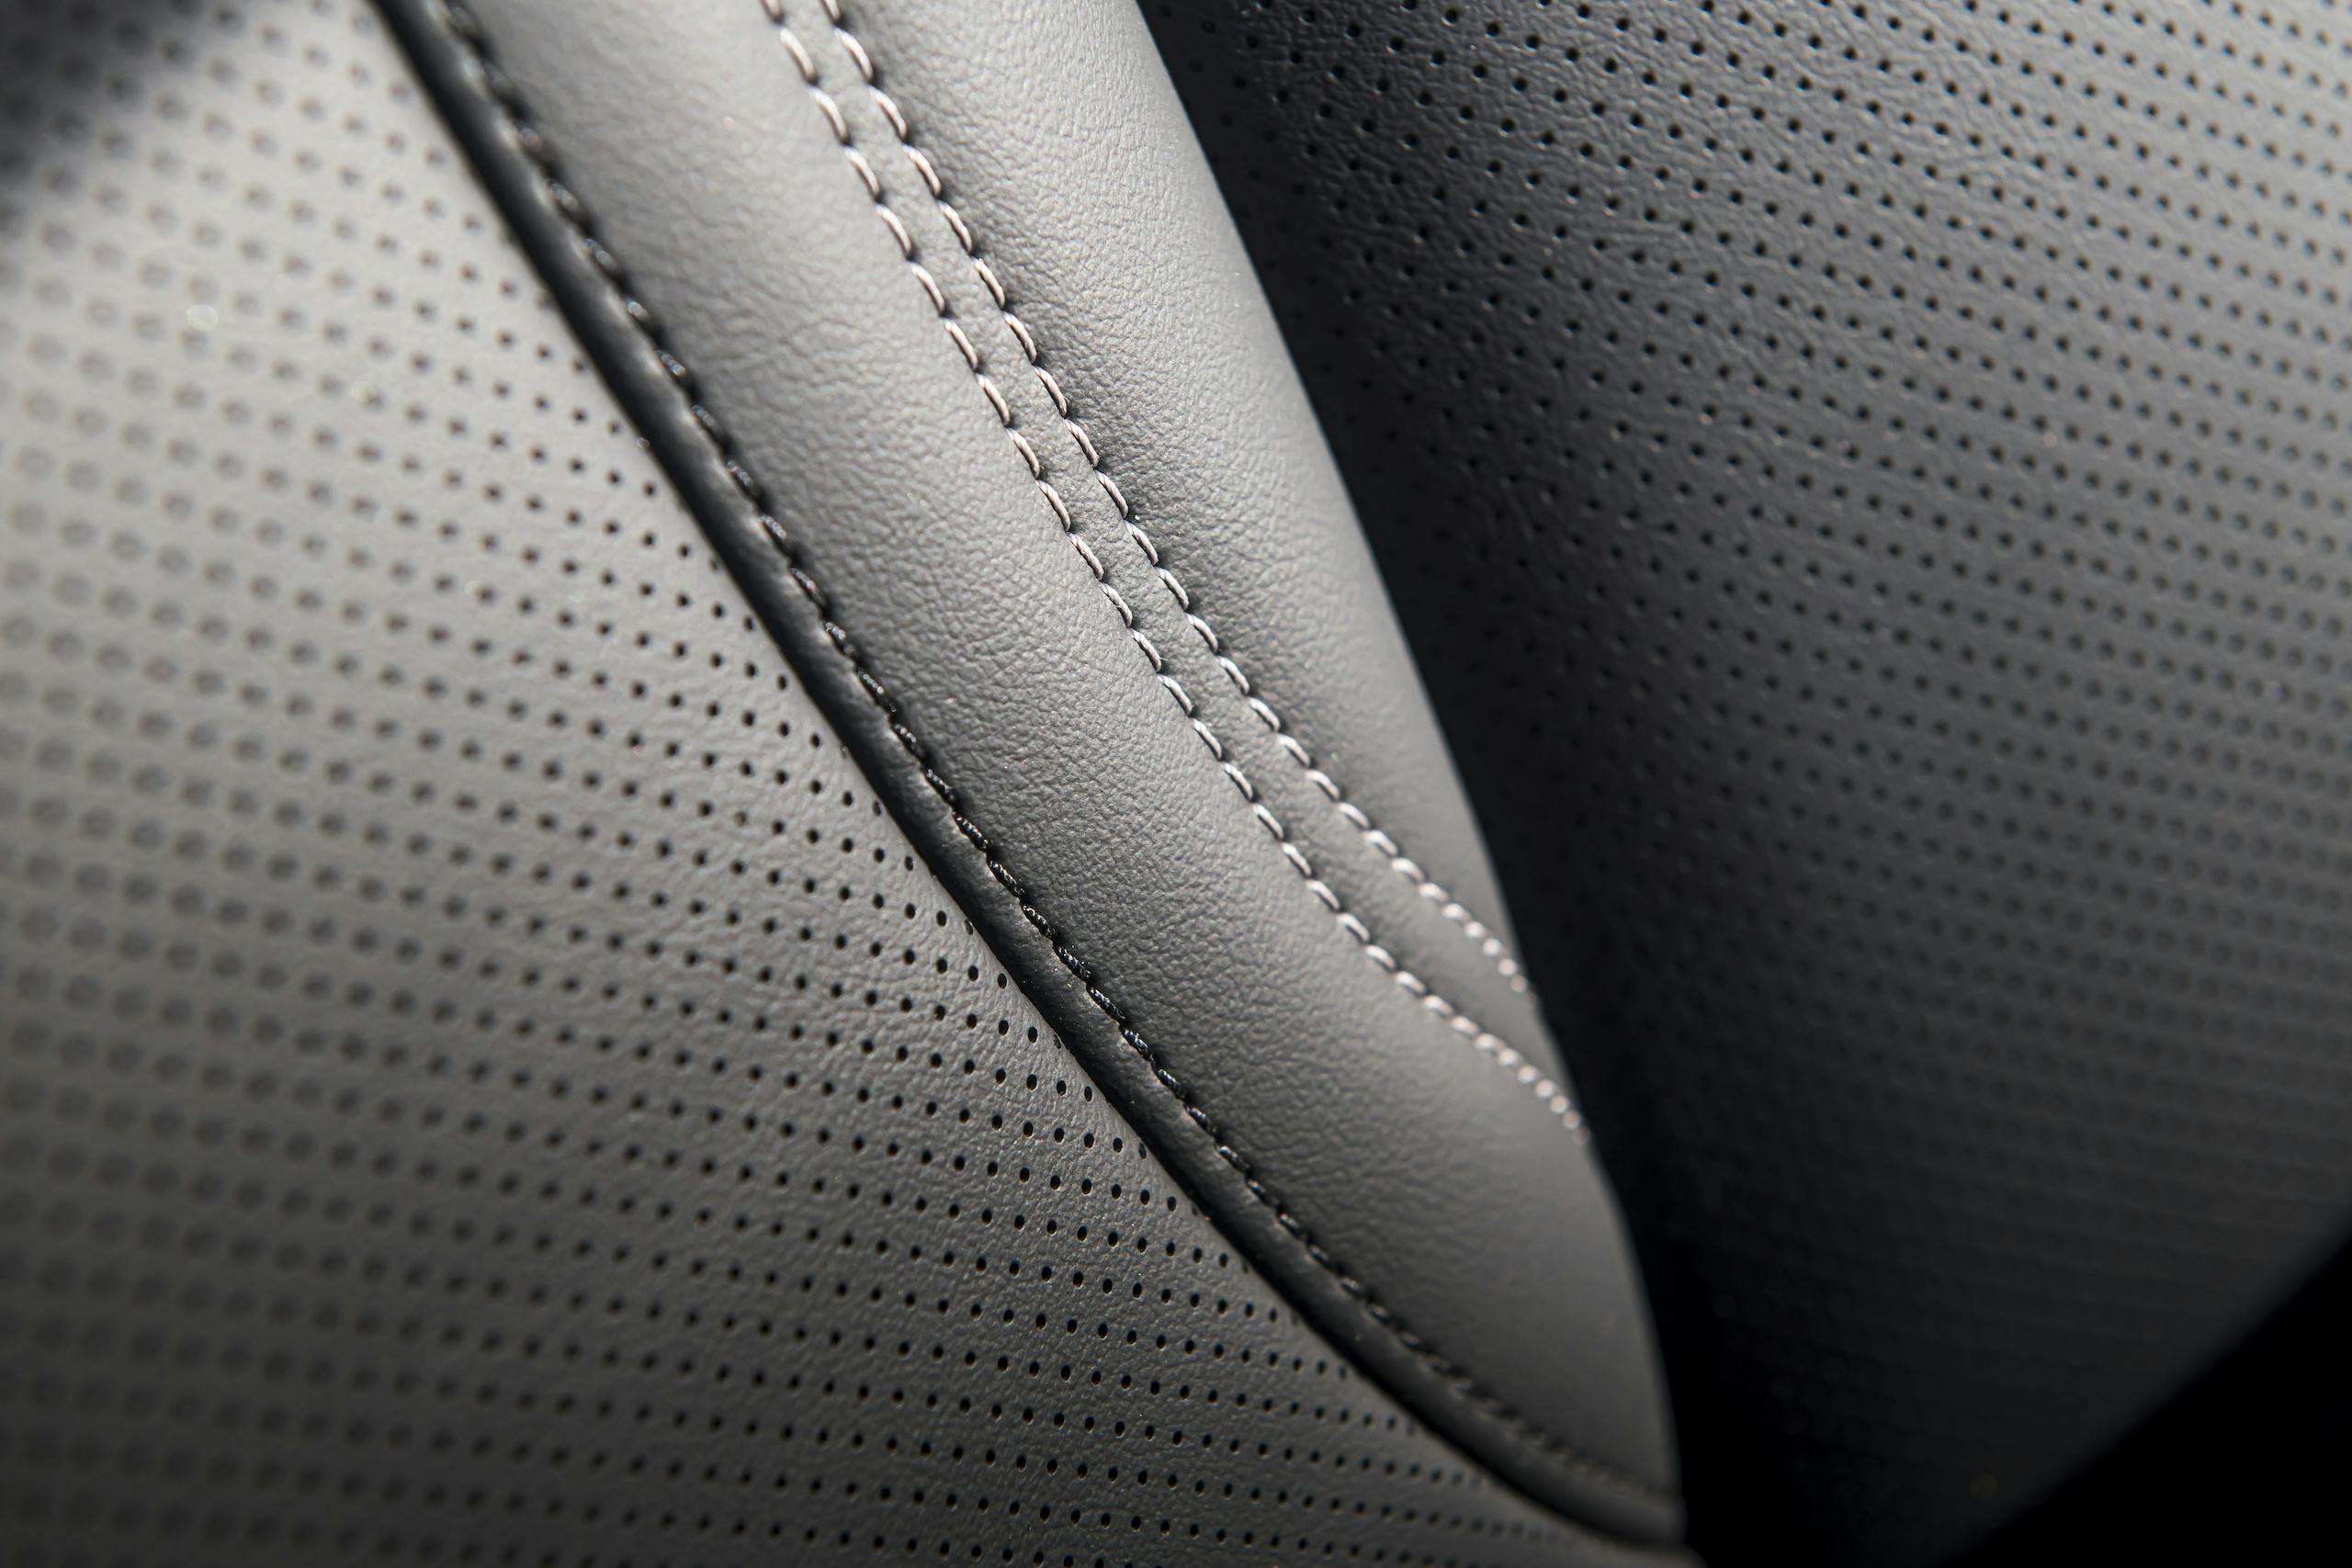 Mustang Mach-E seat stitch detail